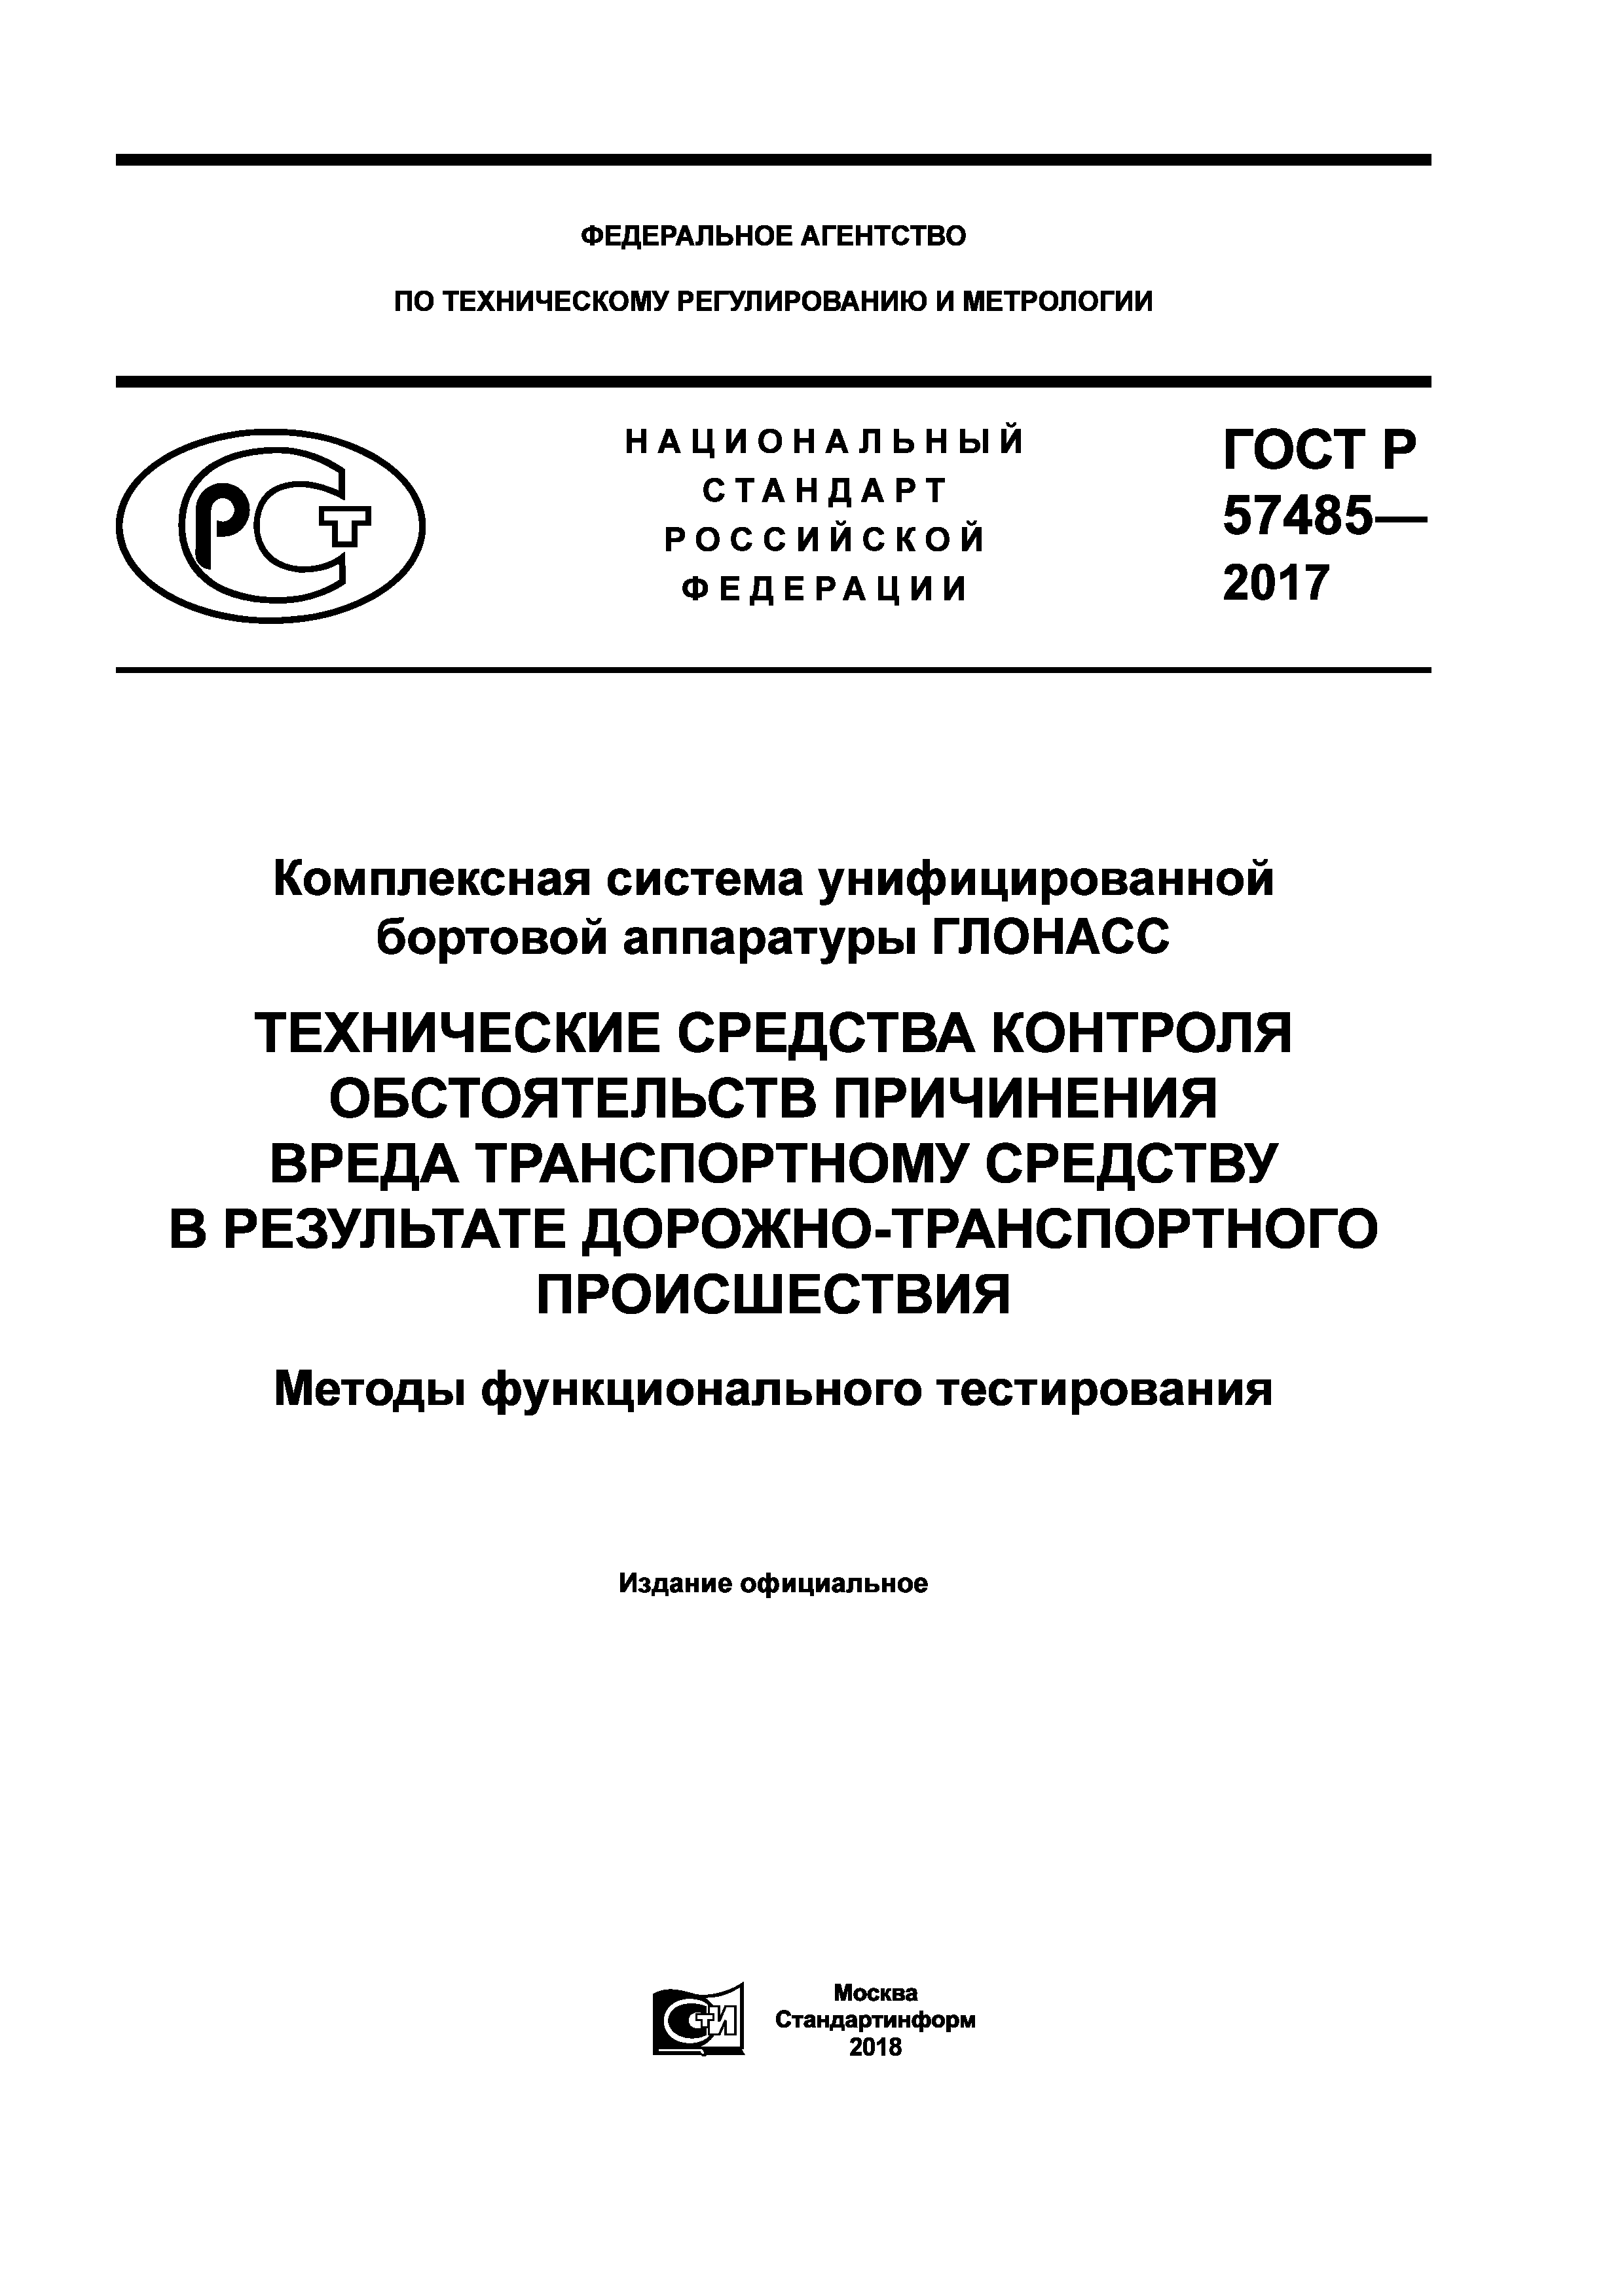 ГОСТ Р 57485-2017